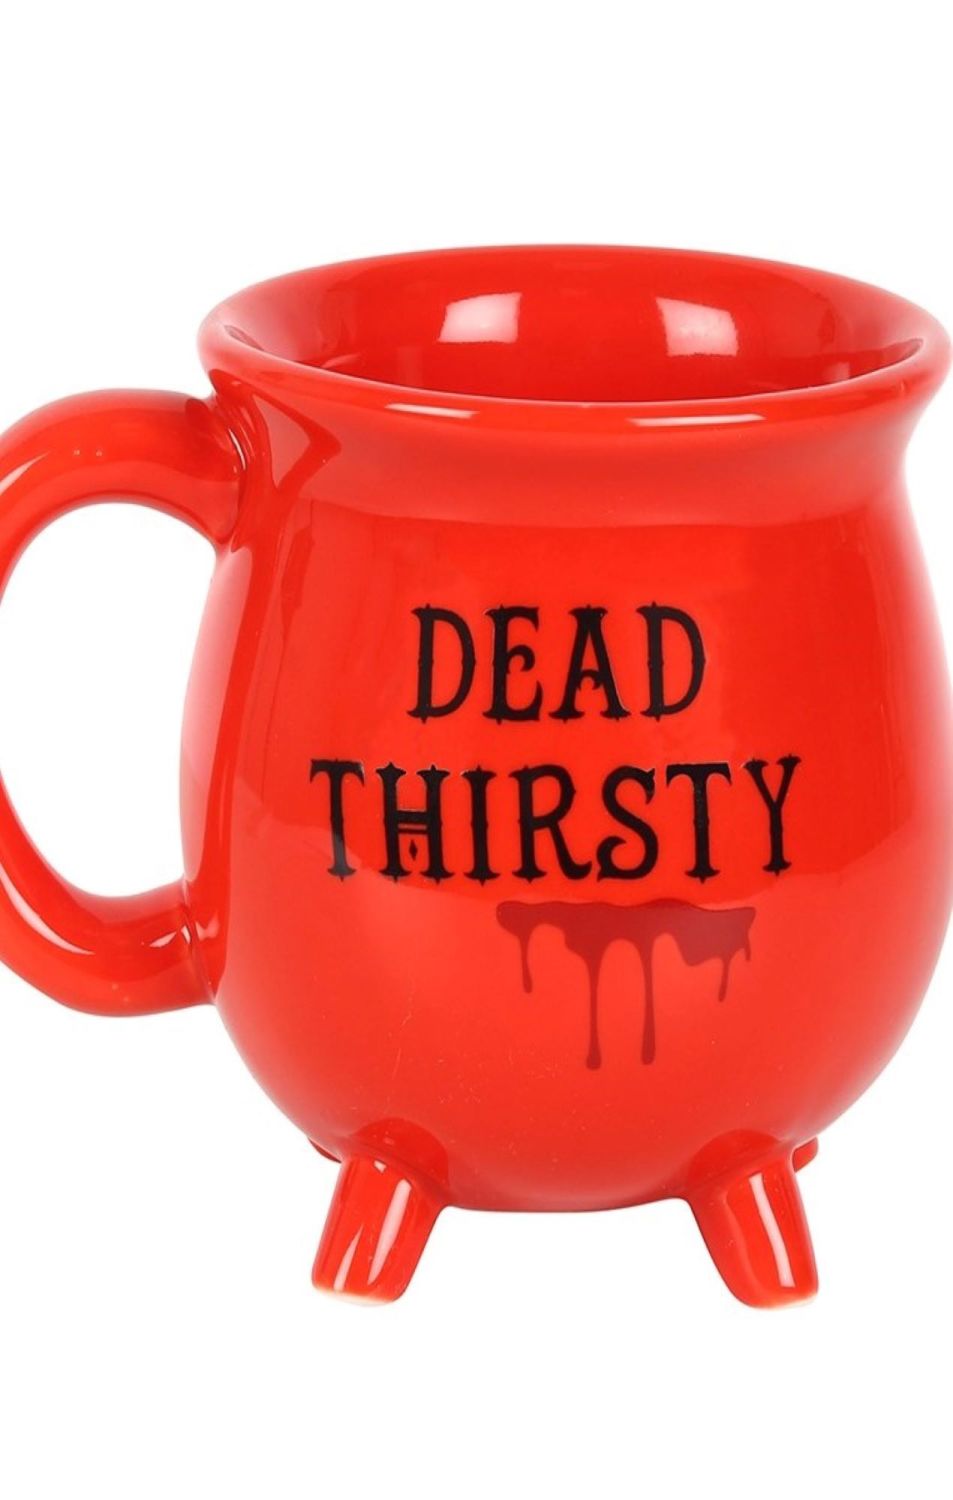 Dead thirsty cauldron mug RRP £14.99